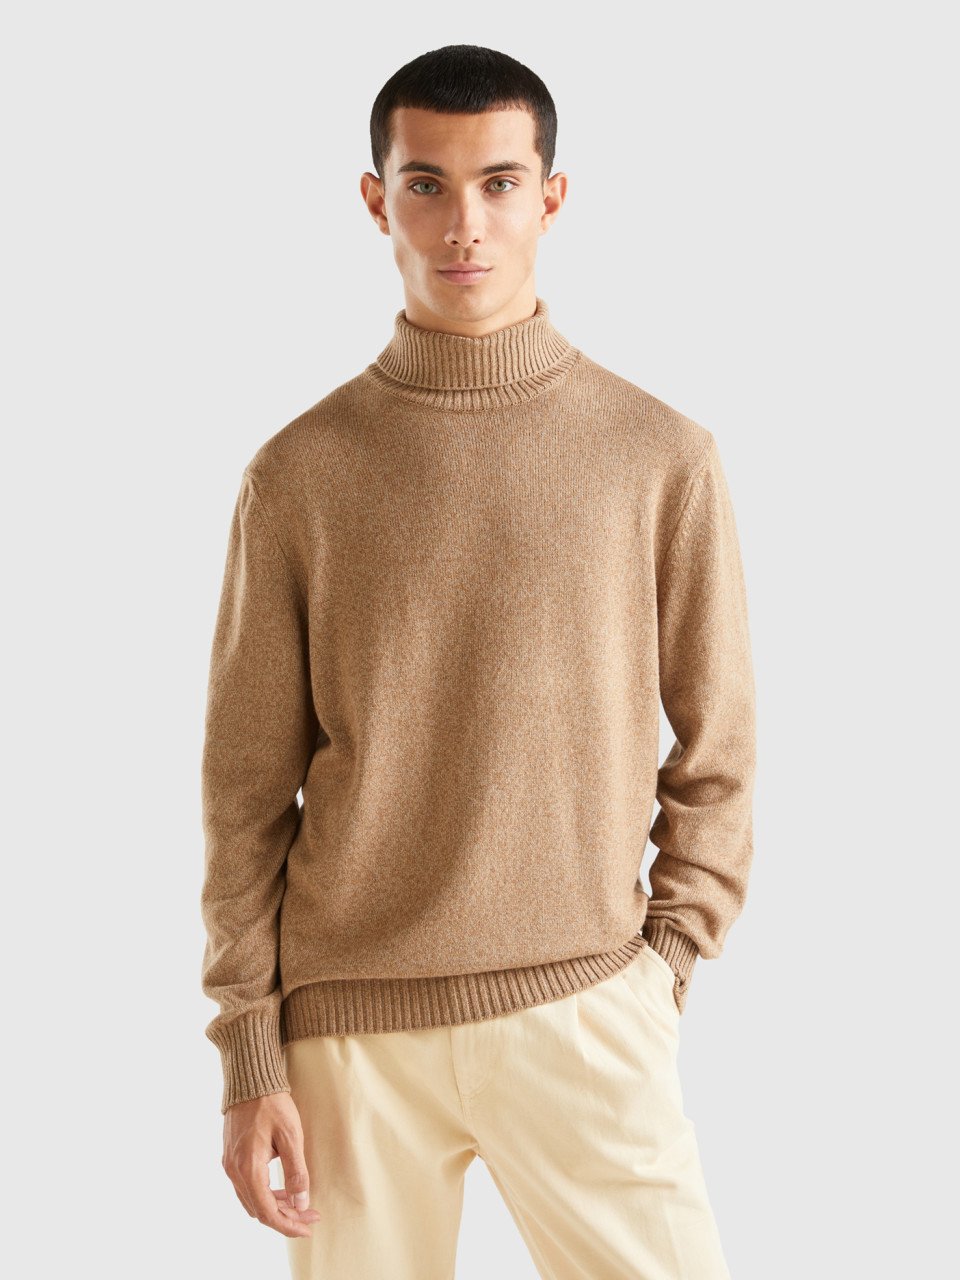 Benetton, Turtleneck Sweater In Cashmere And Wool Blend, Beige, Men